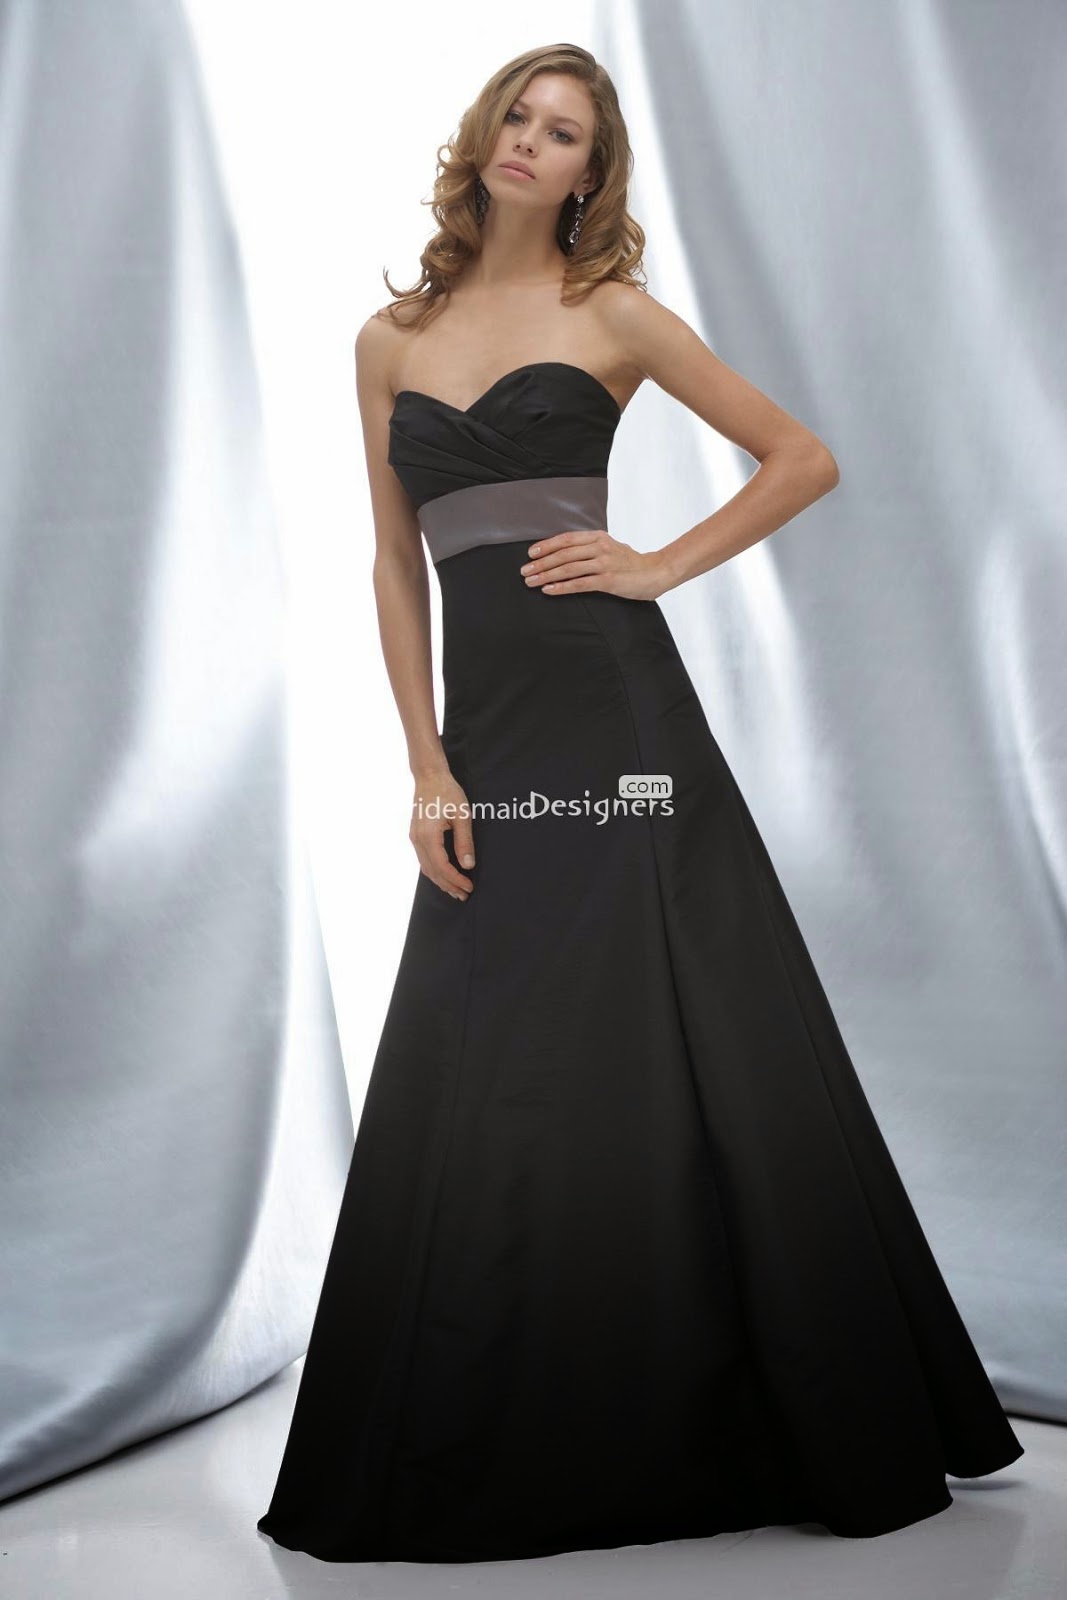 http://www.bridesmaiddesigners.com/beautiful-black-sleeveless-empire-sweetheart-a-line-taffeta-bridesmaid-dress-with-sash-433.html